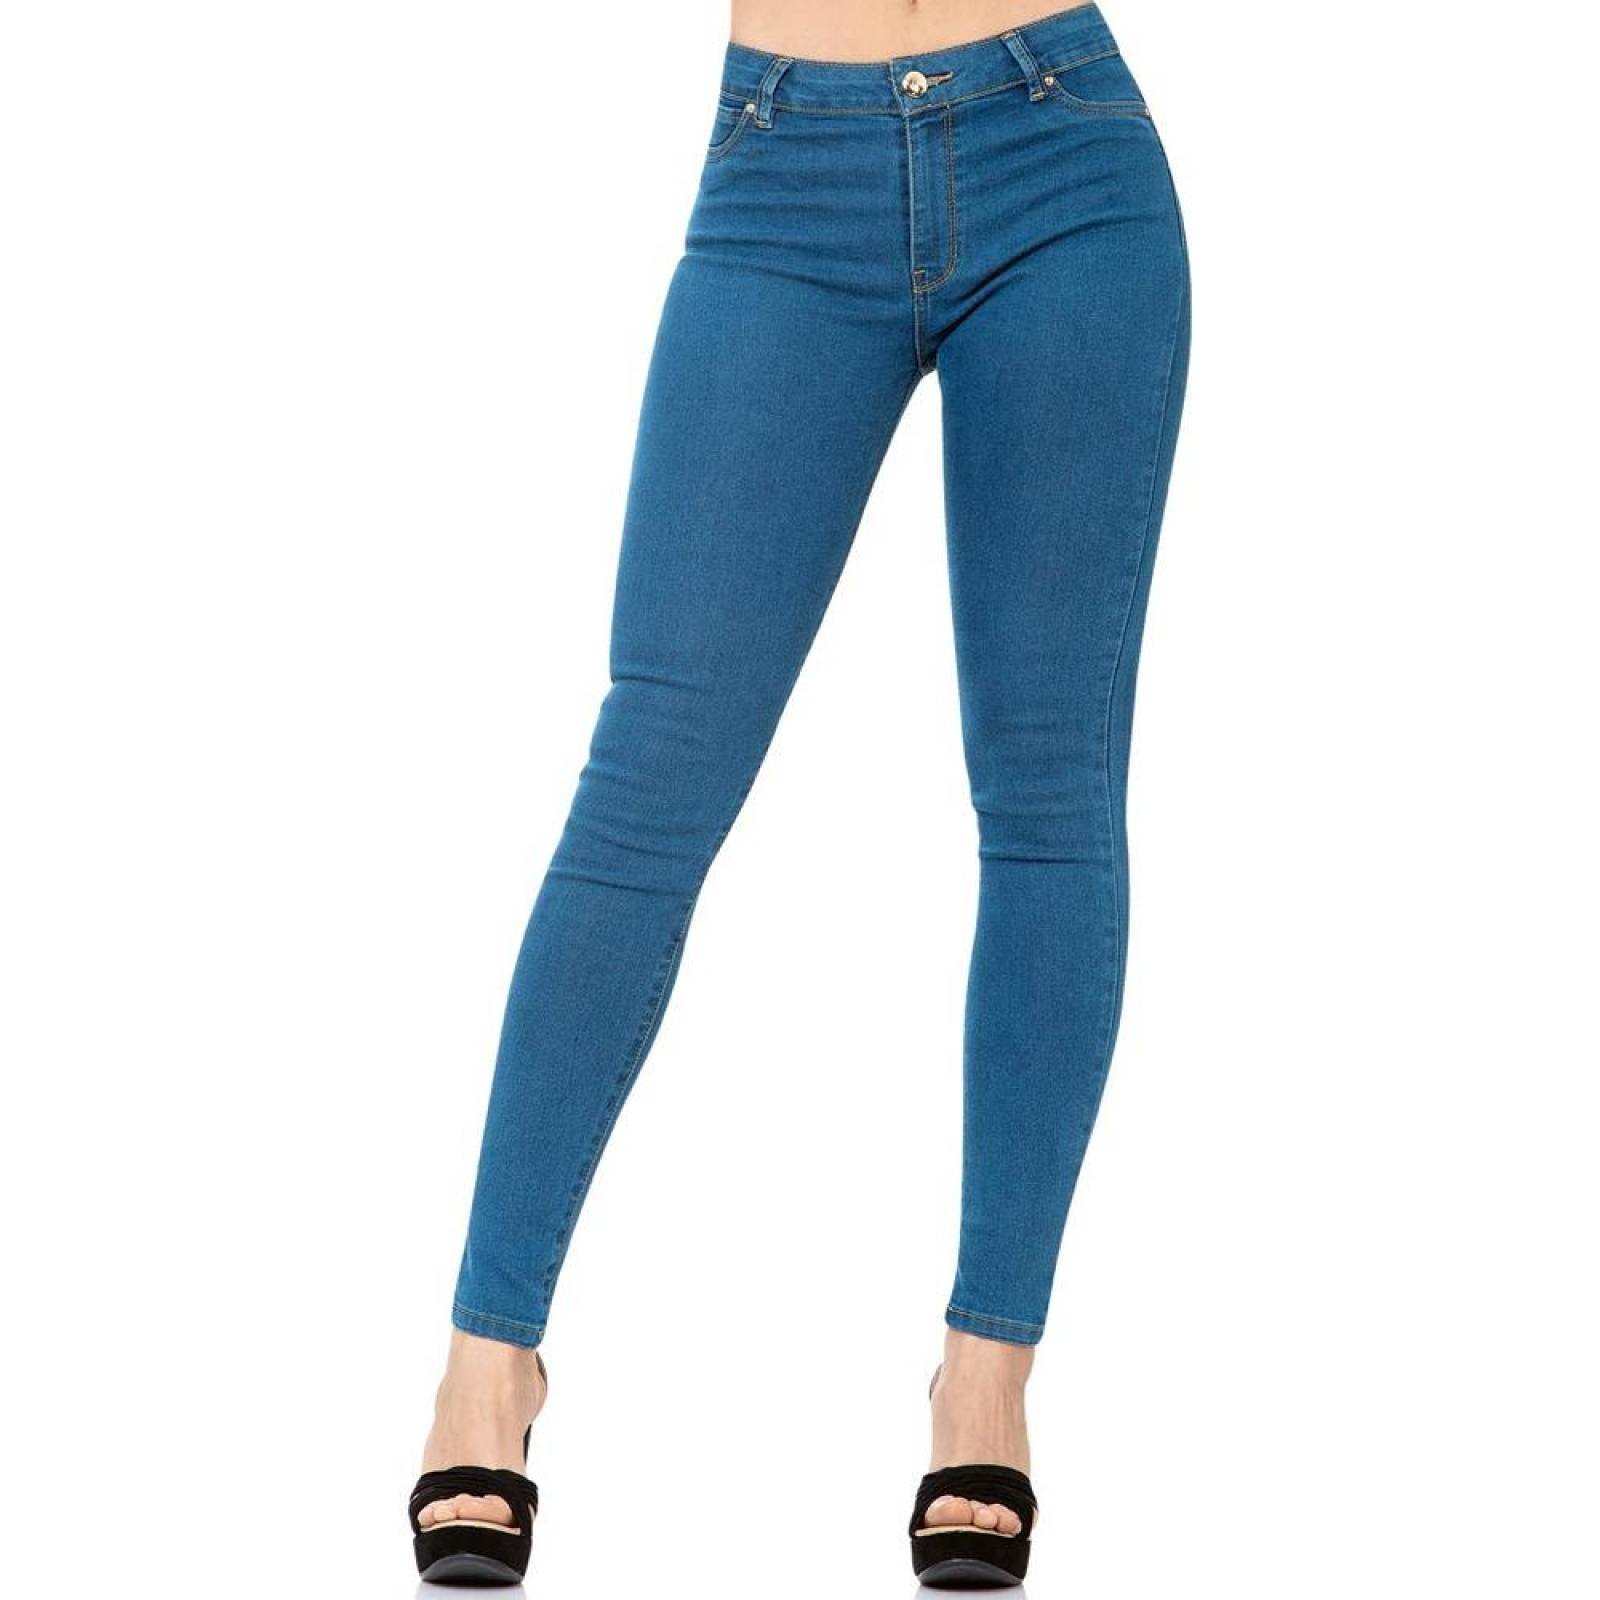 Jeans Básico Mujer Furor Used 62104010 Mezclilla Stretch 